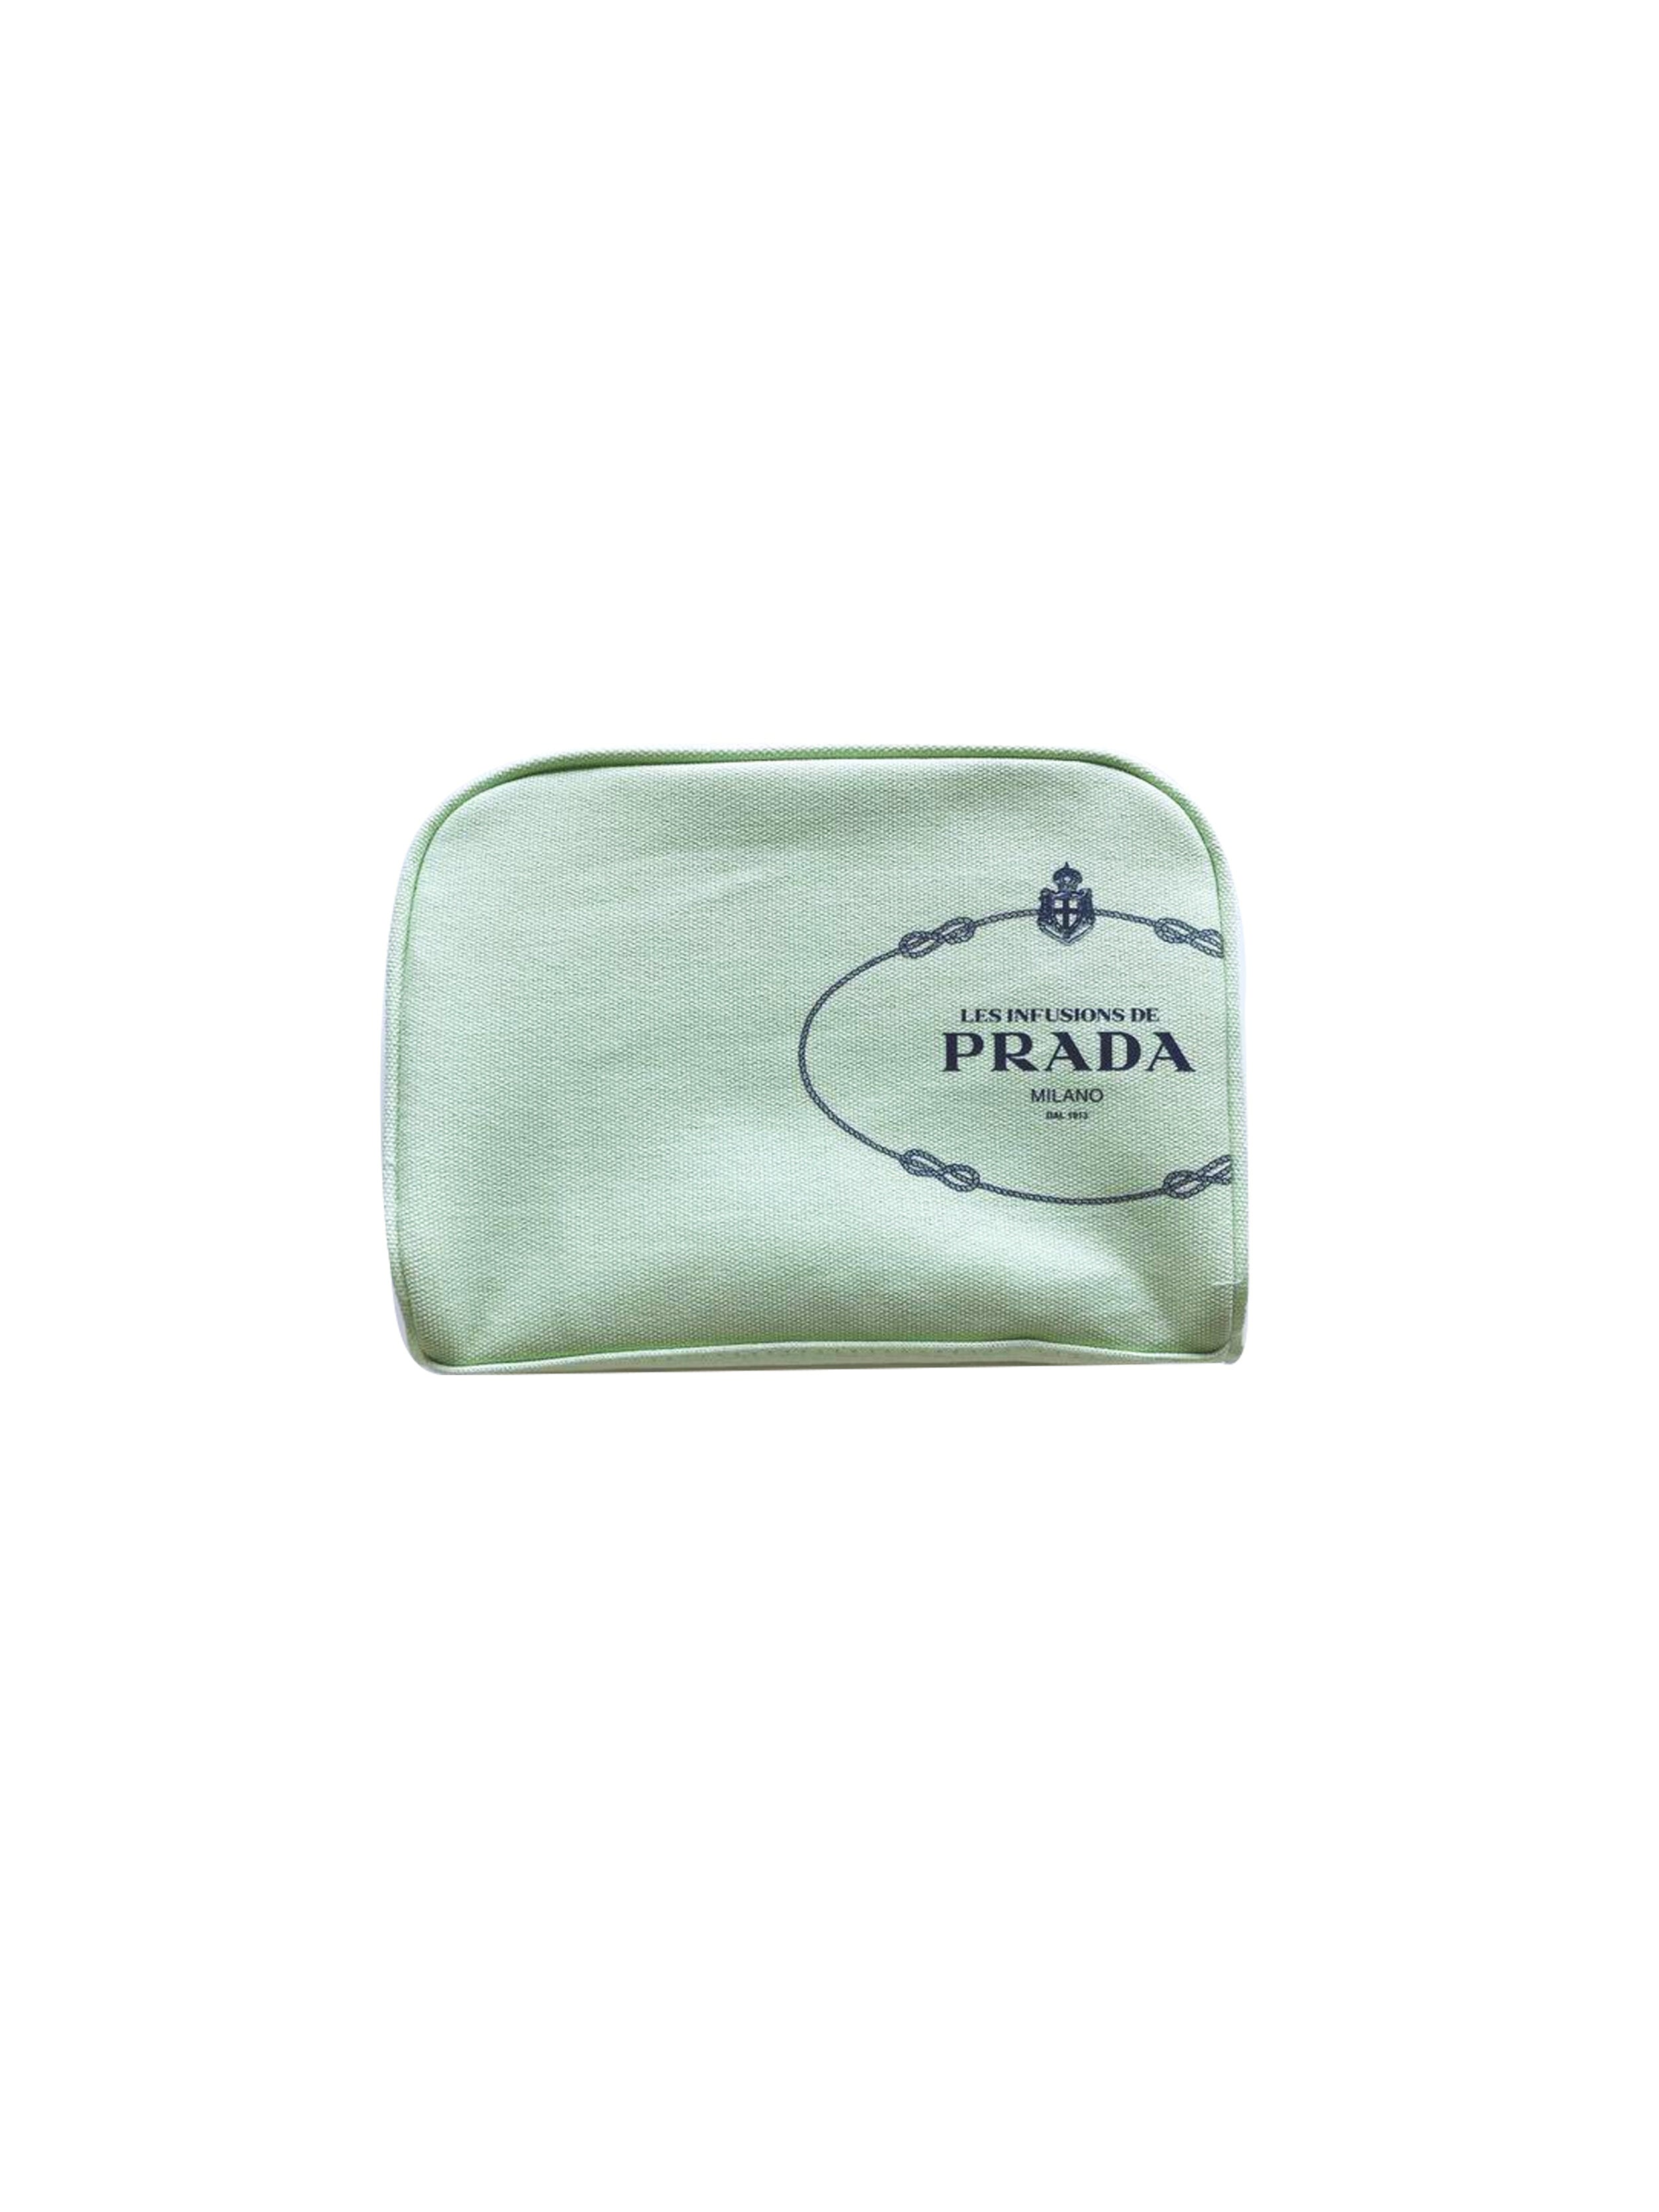 Prada Saffiano leather shoulder bag for Women - Green in UAE | Level Shoes